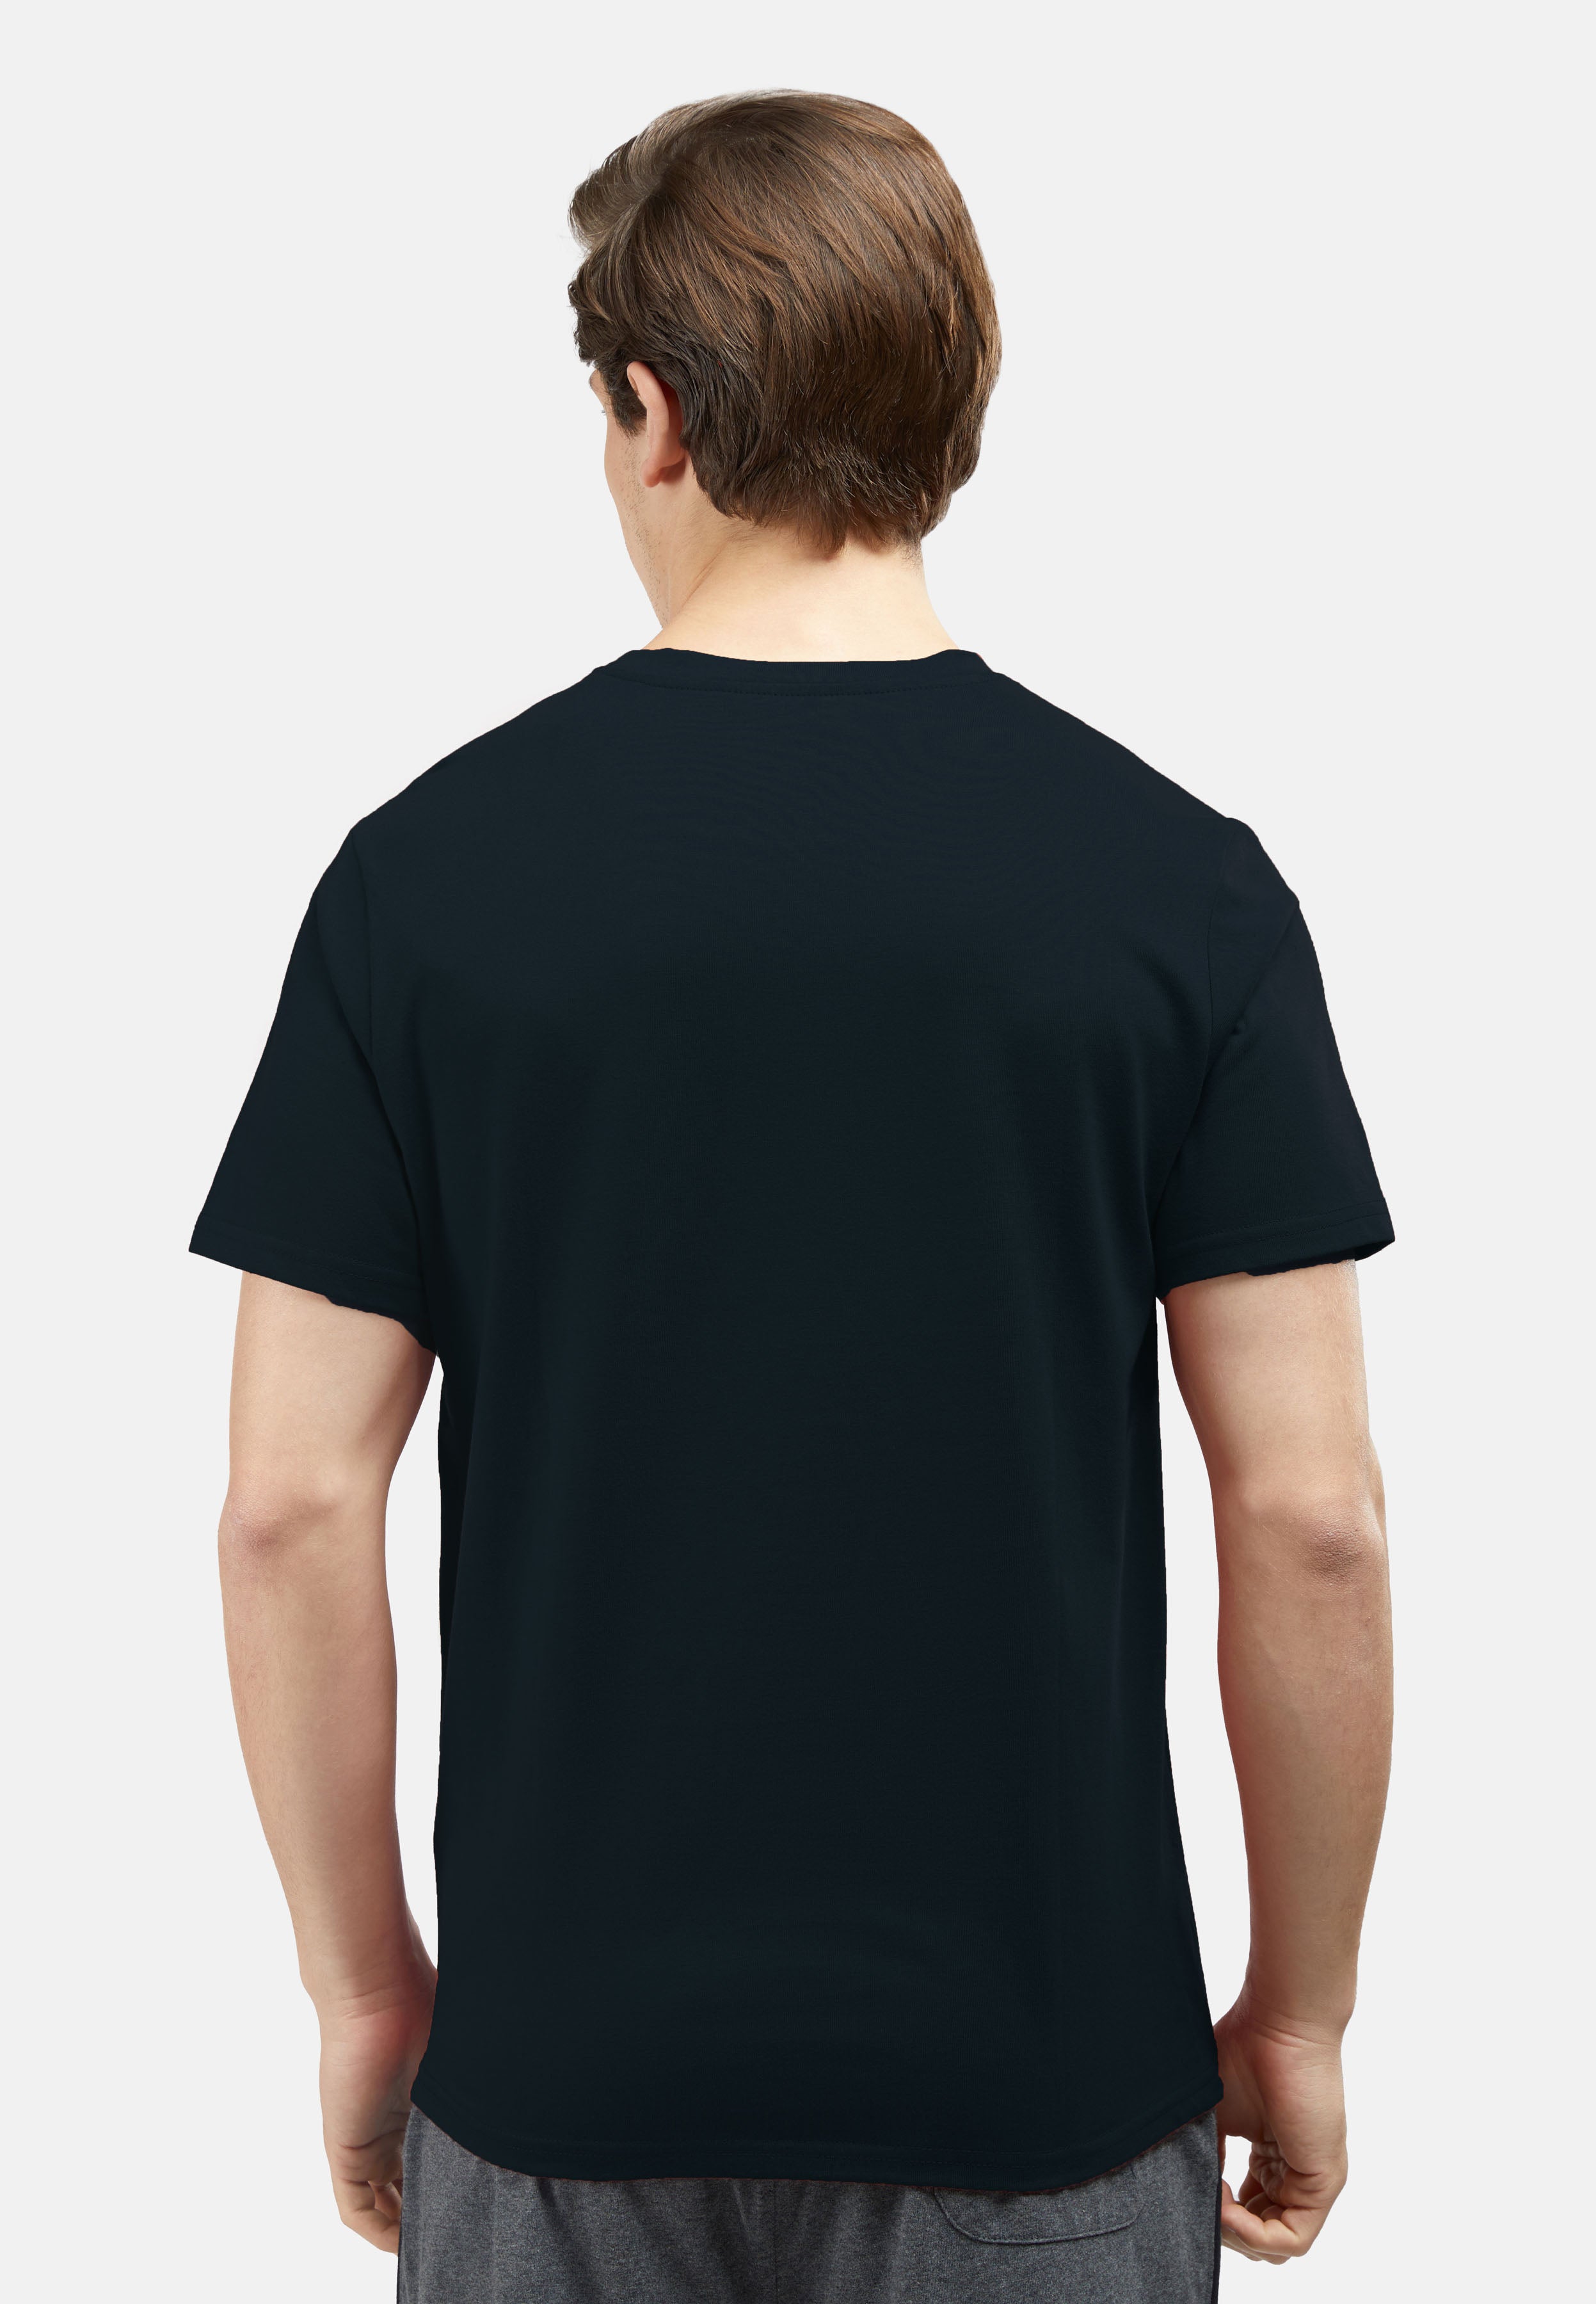 Cheetah Premium Cotton Round Neck Short Sleeve T-Shirt (B)- 99276(R)